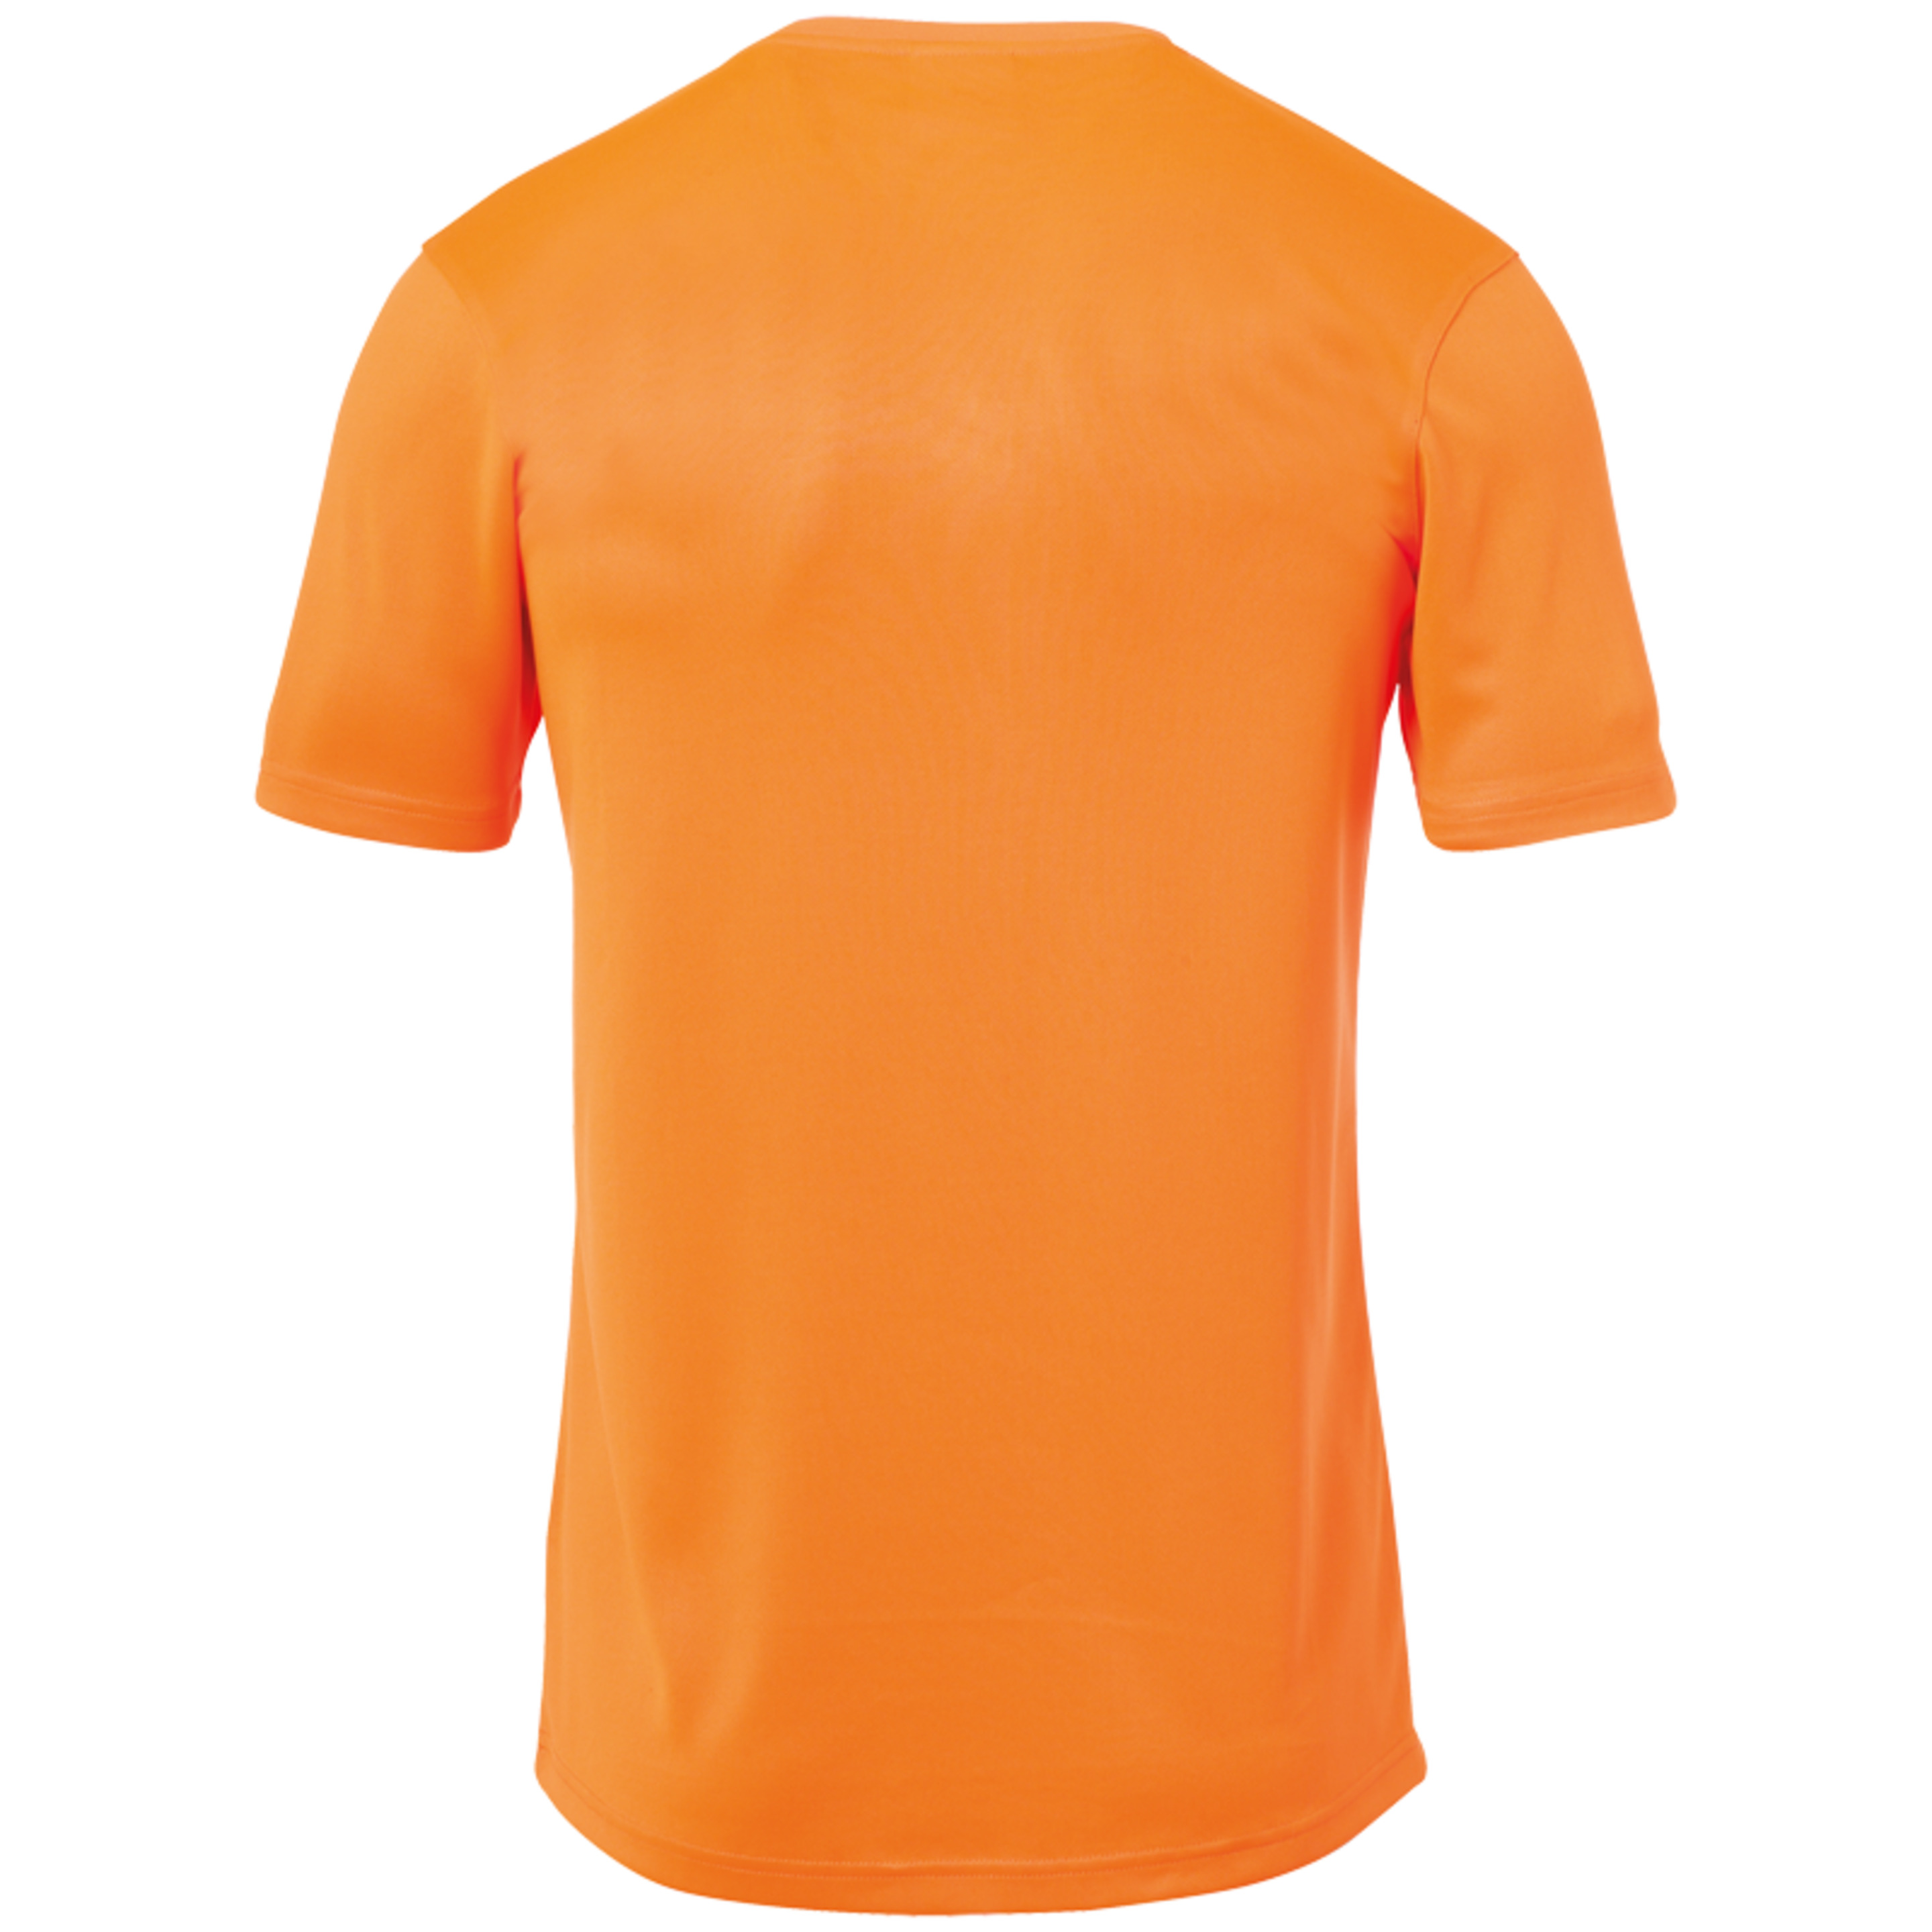 Stream 22 Shirt Shortsleeved Naranja Uhlsport - naranja - Stream 22 Shirt Shortsleeved Naranja Uhlsport  MKP